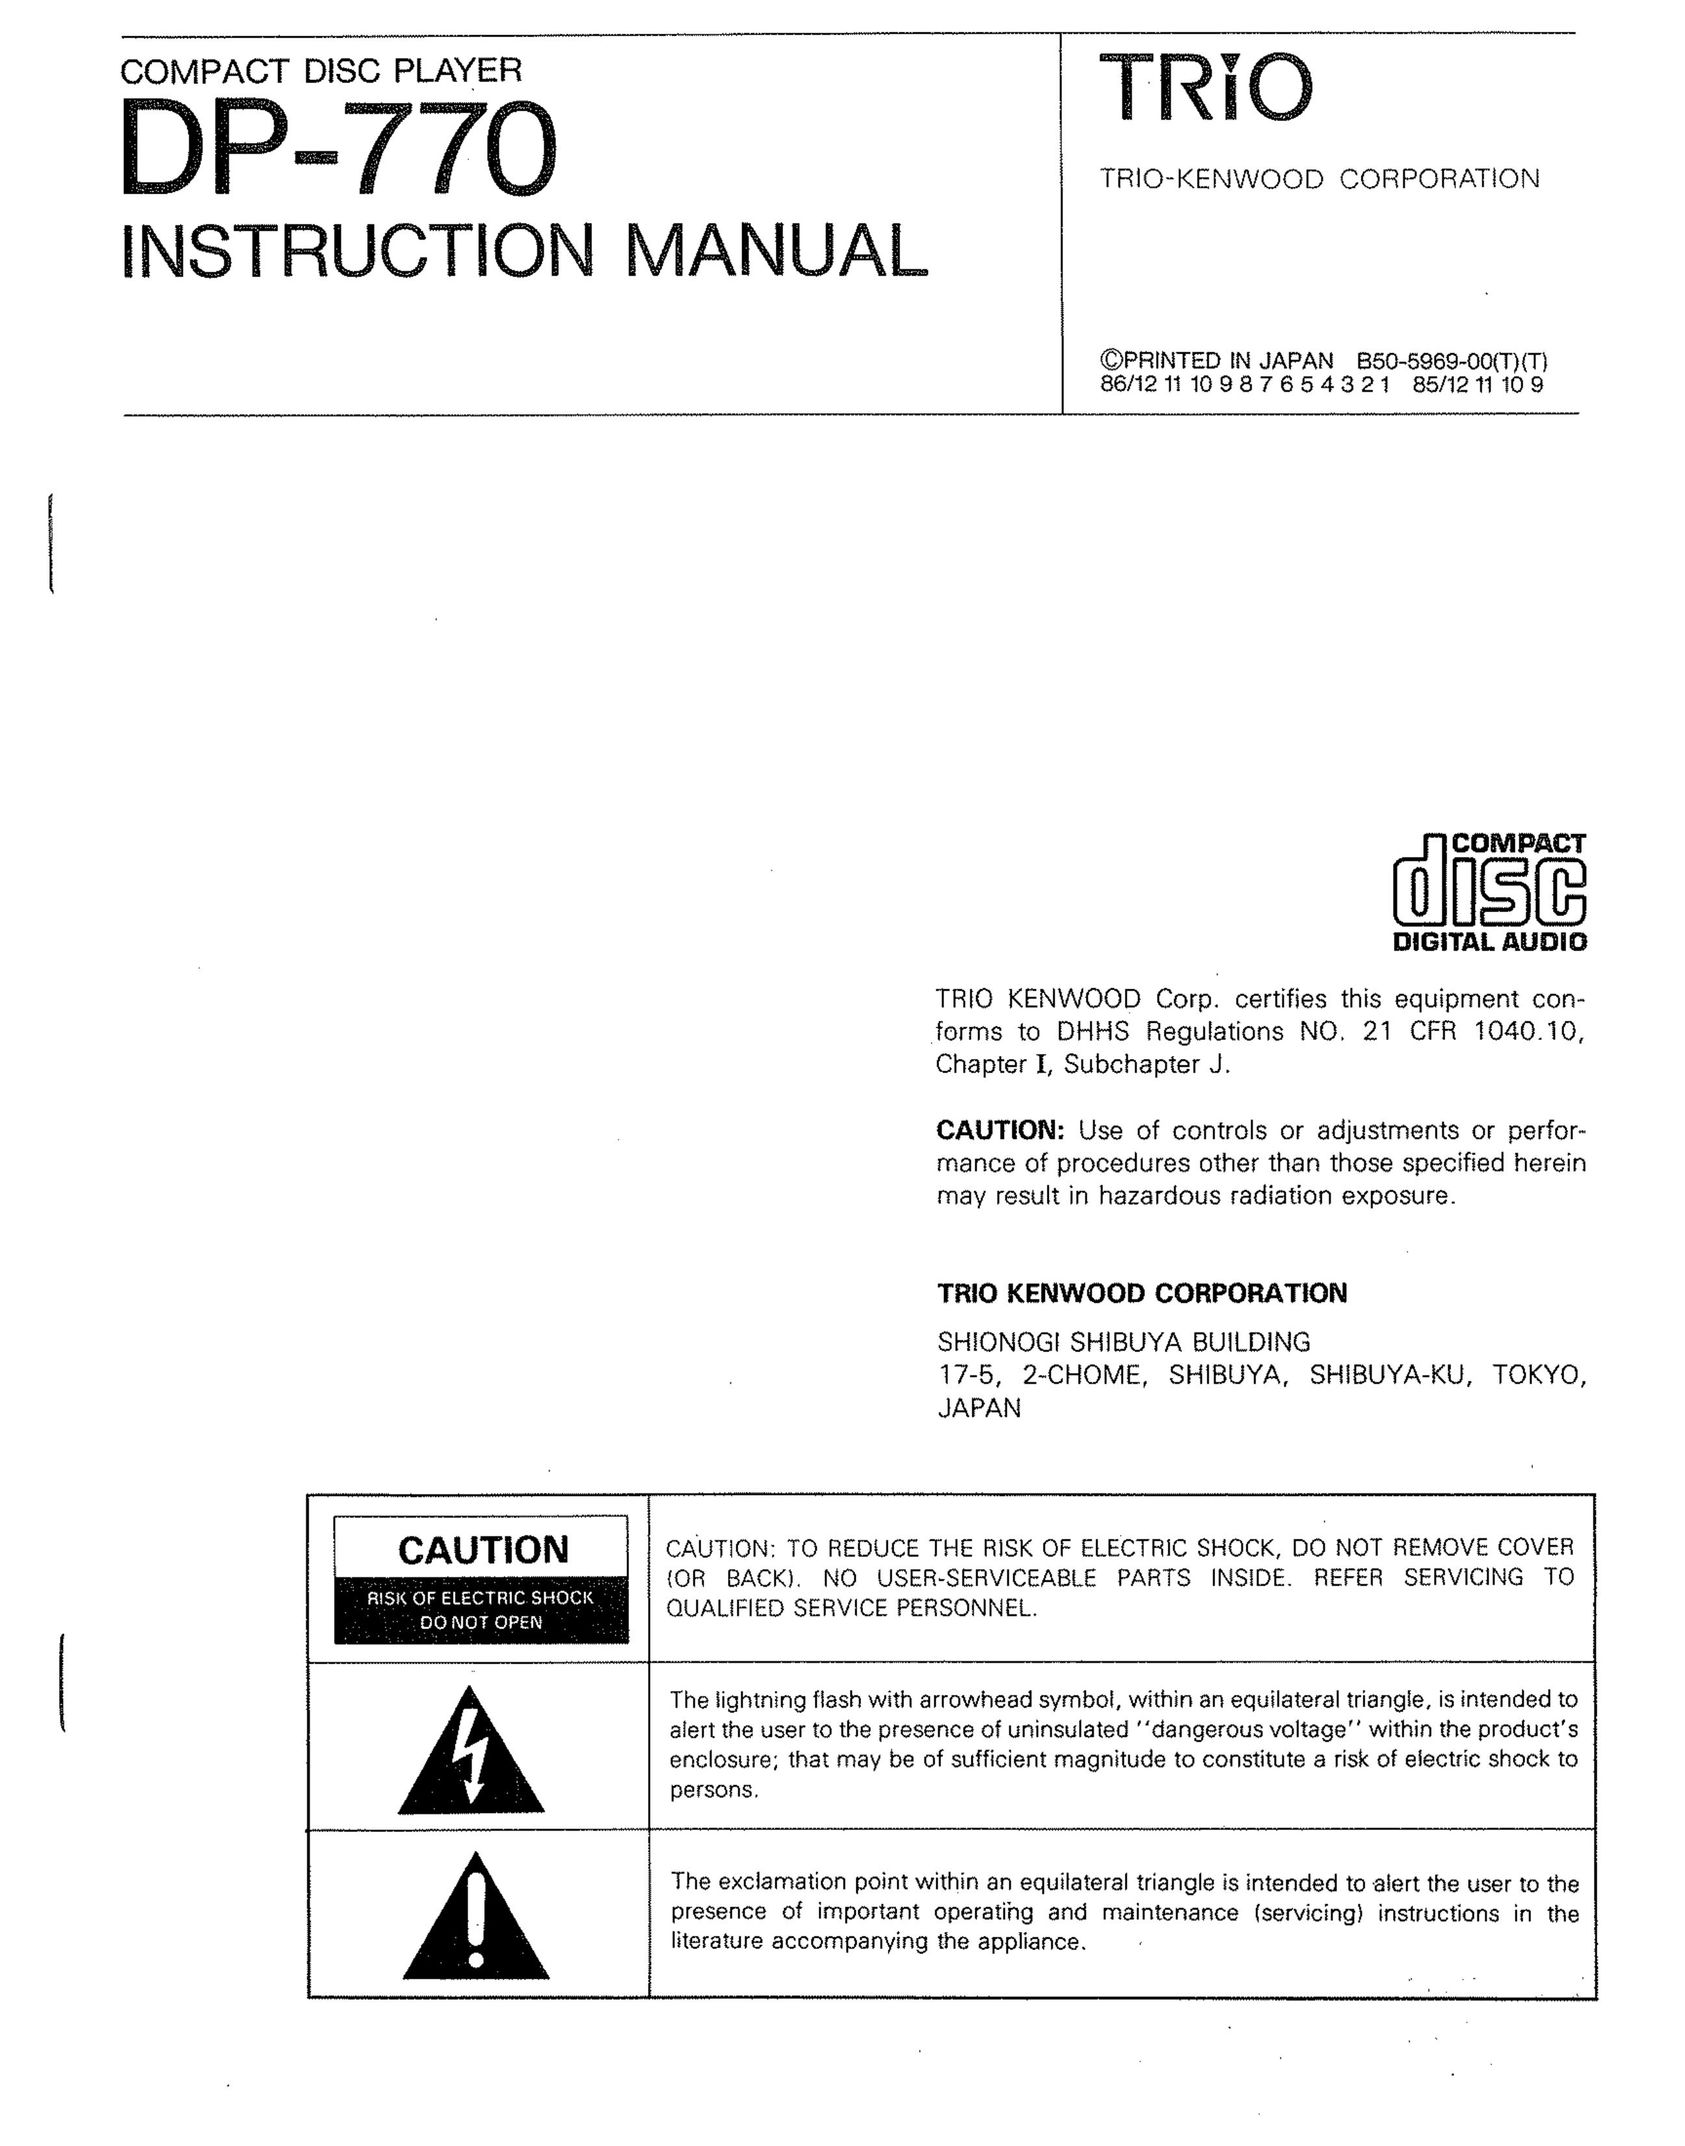 Kenwood DP-770 CD Player User Manual